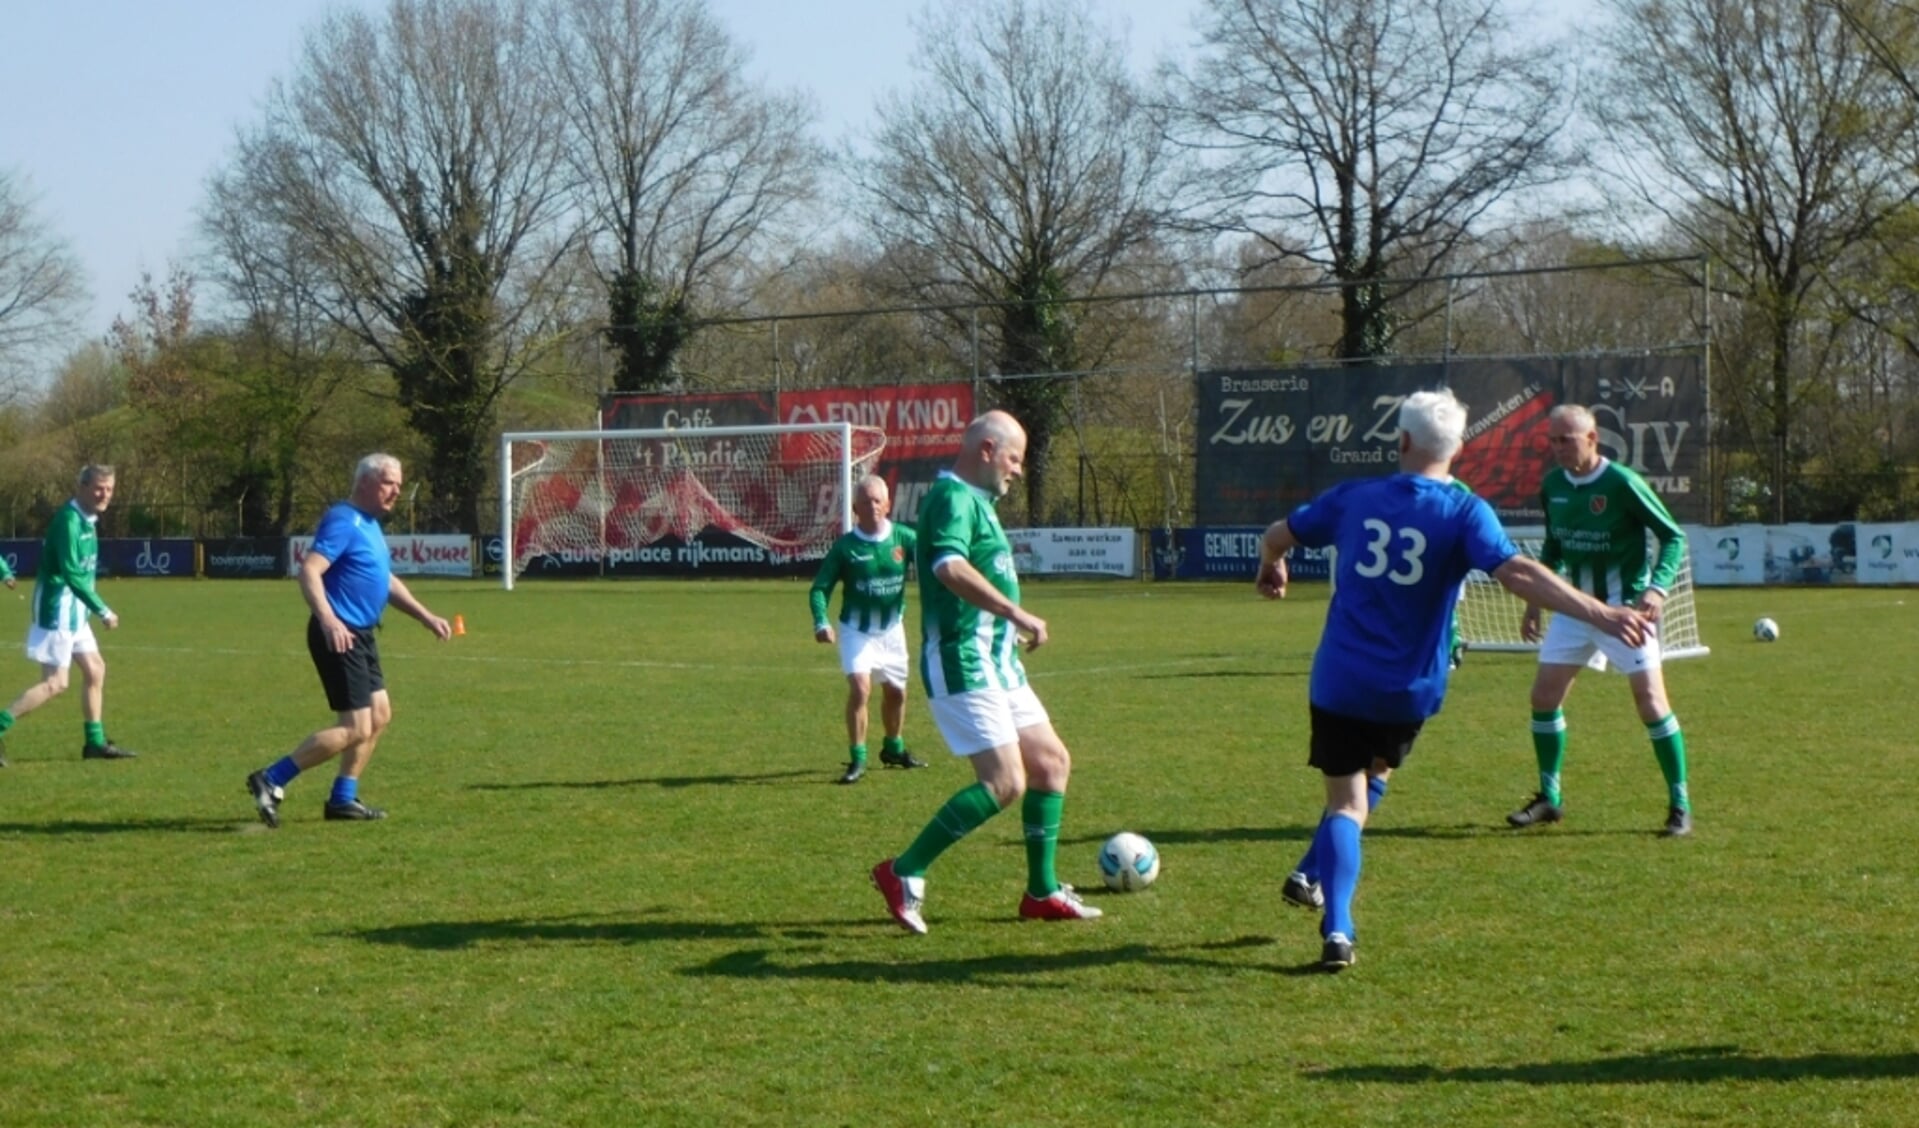 Vv Steenwijk (blauwe shirts) tegen FC Meppel